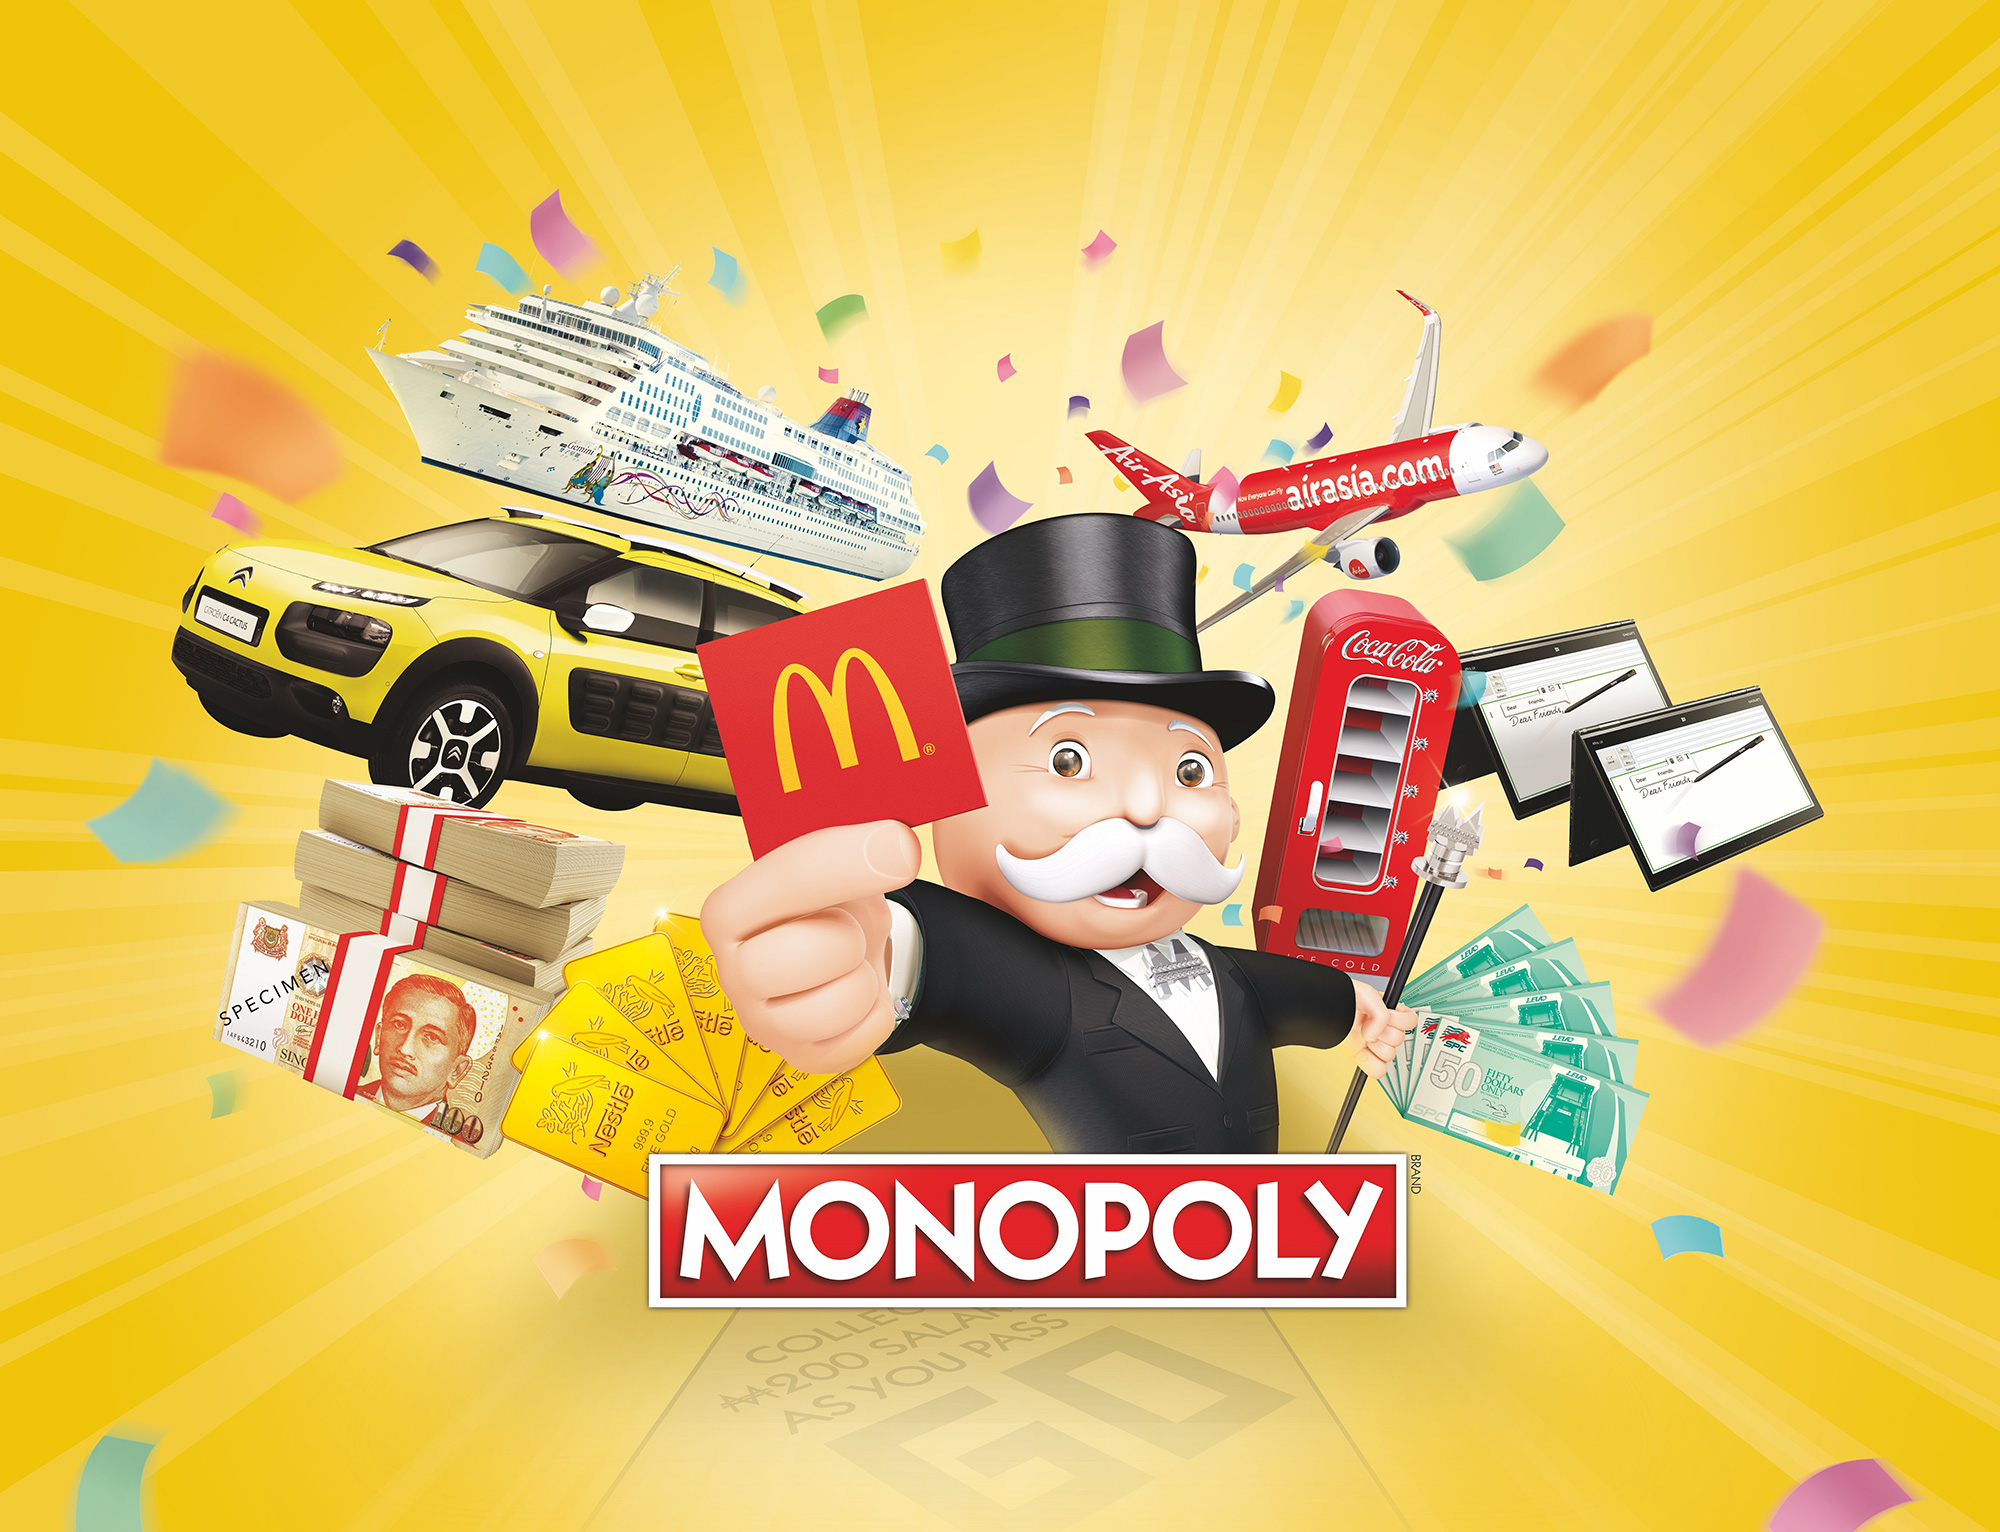 mcdonalds monopoly 2019 usa